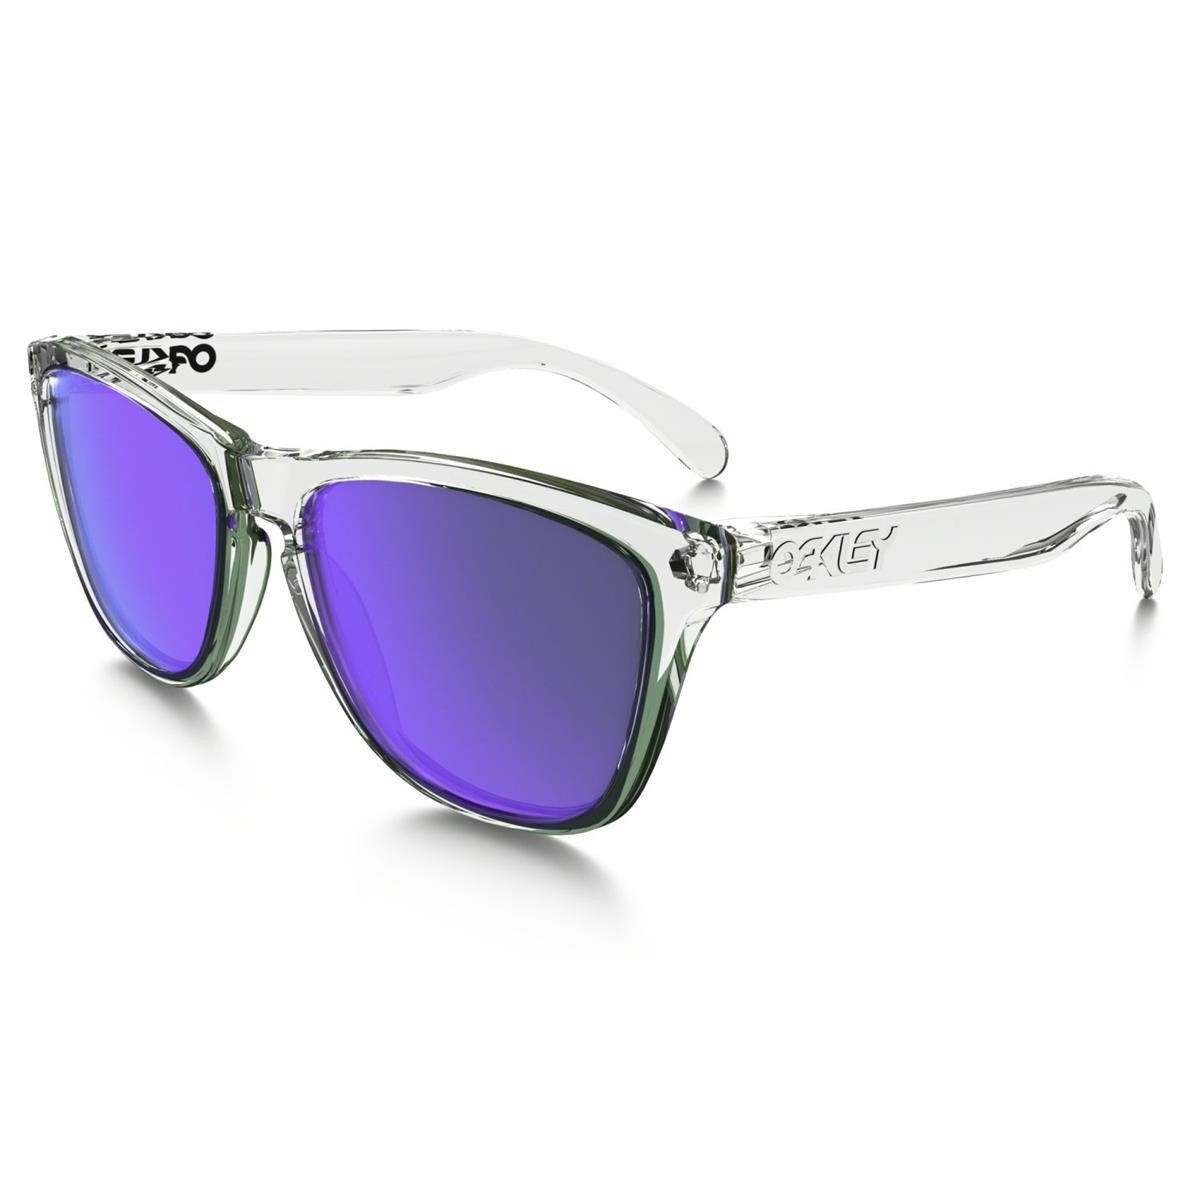 Oakley Sunglasses Frogskins Polished Clear/Violet Iridium